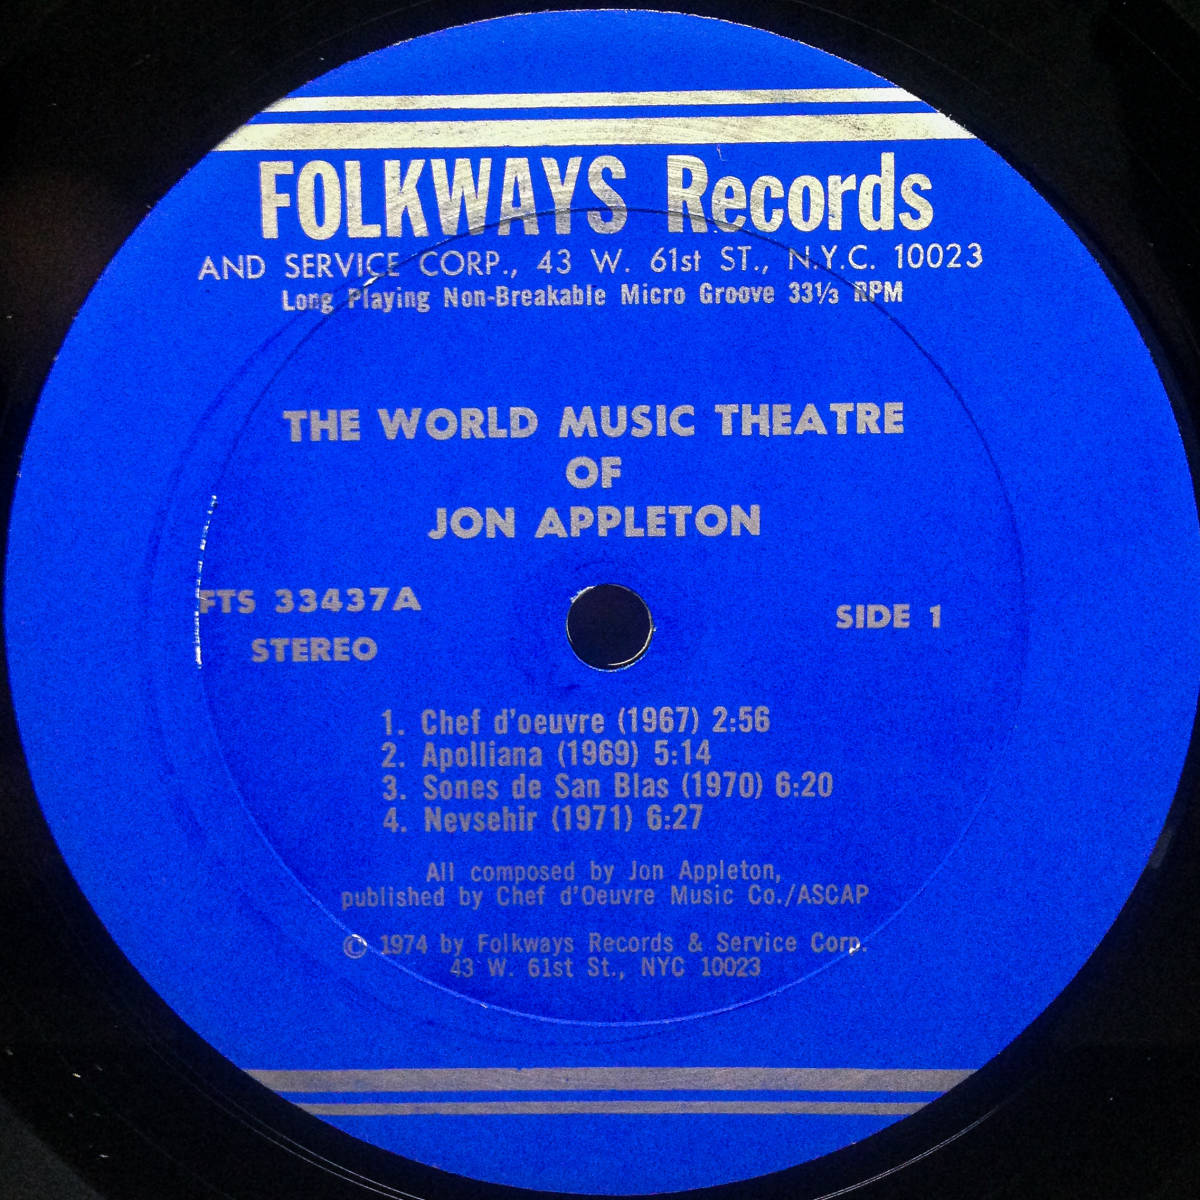 [LP] '74米Orig / Jon Appleton / The World Music Theatre Of Jon Appleton / Folkways Records / FTS 33437 / Musique Concrete_画像3